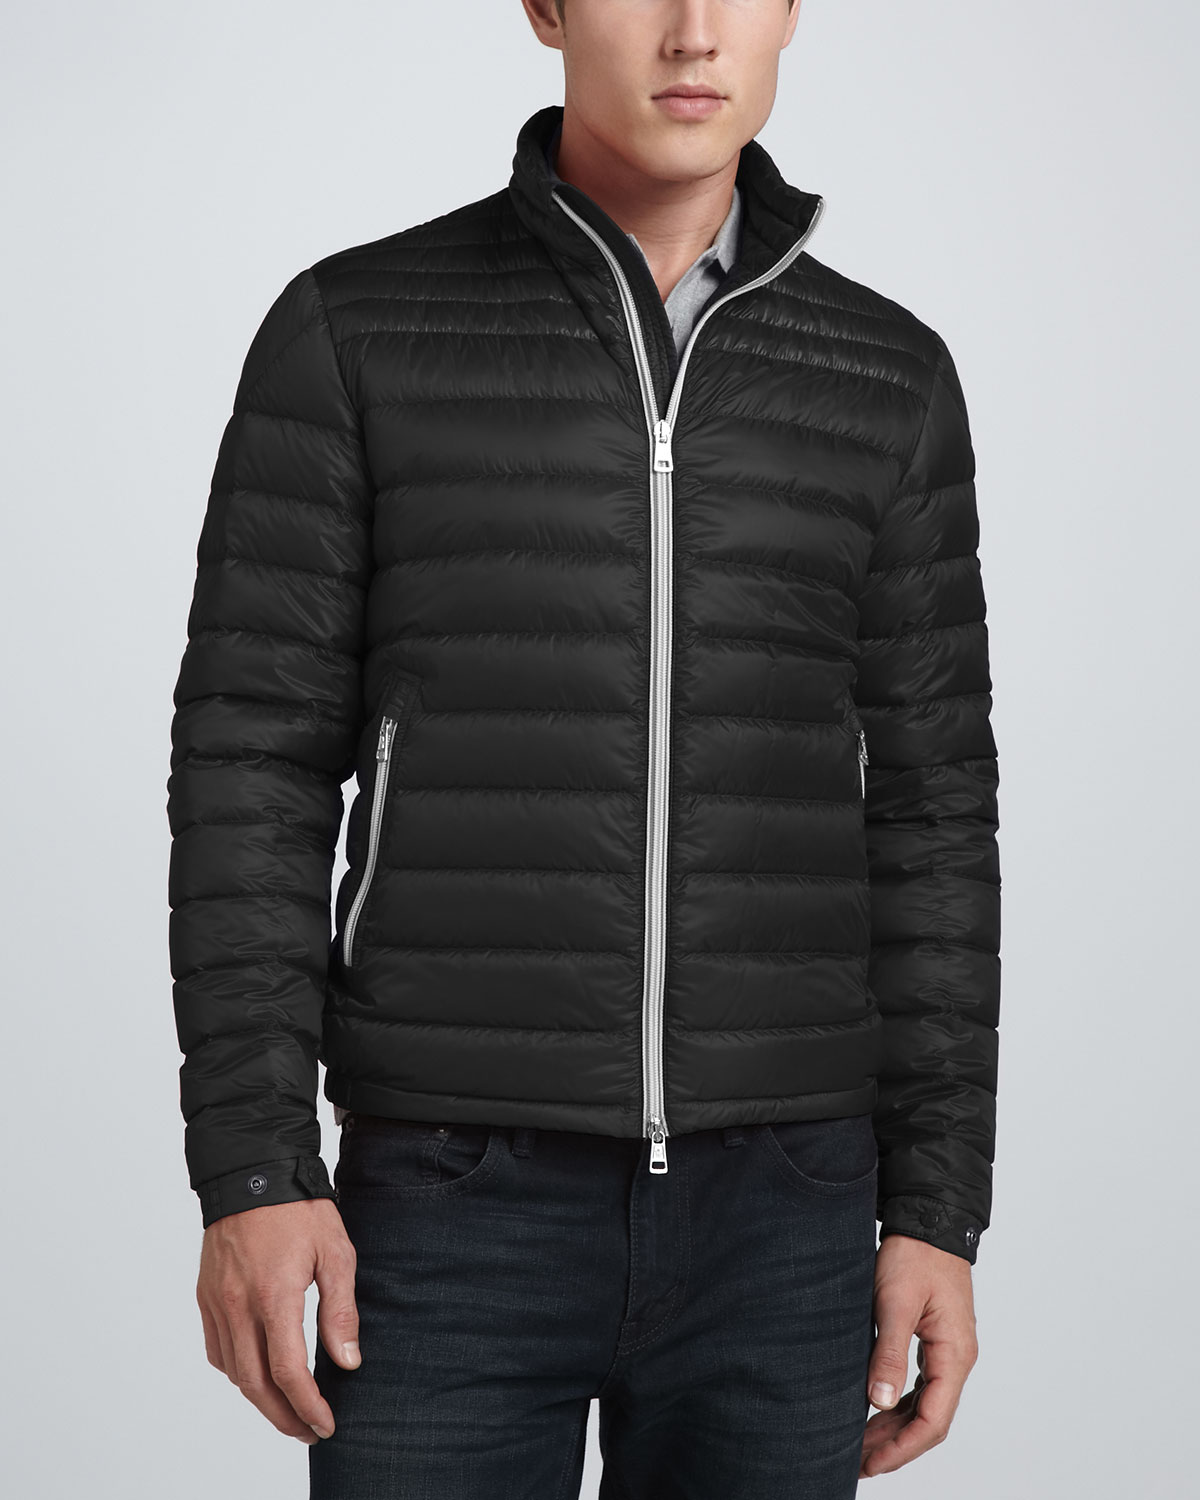 Lyst - Moncler Acorus Lightweight Puffer Jacket in Black for Men